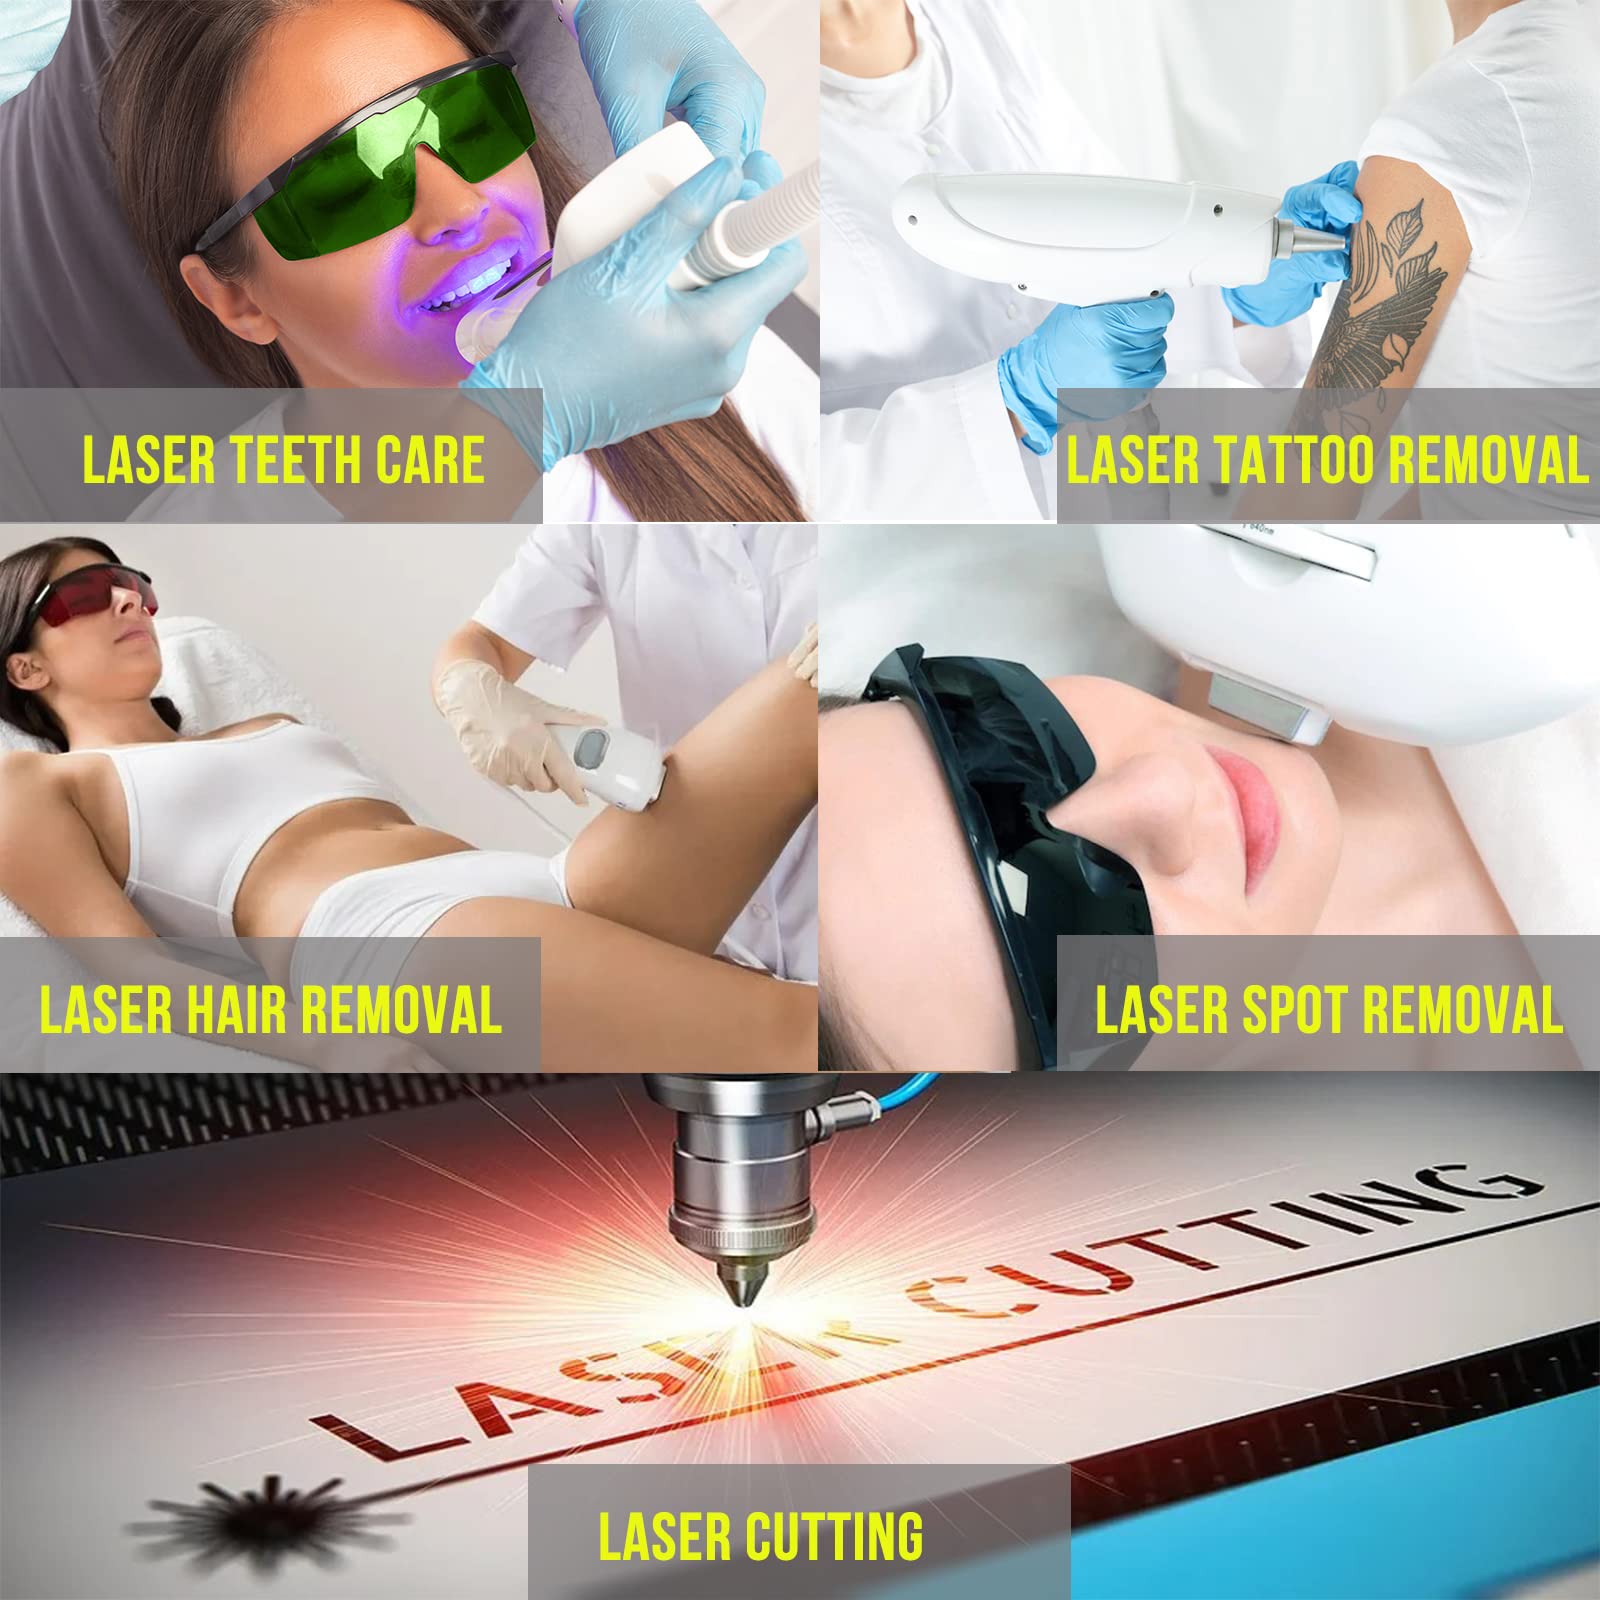 MORELKE Laser Safety Glasses, IPL 200-2000nm Laser Glasses Eye Protection for Laser Hair Removal Treatment.